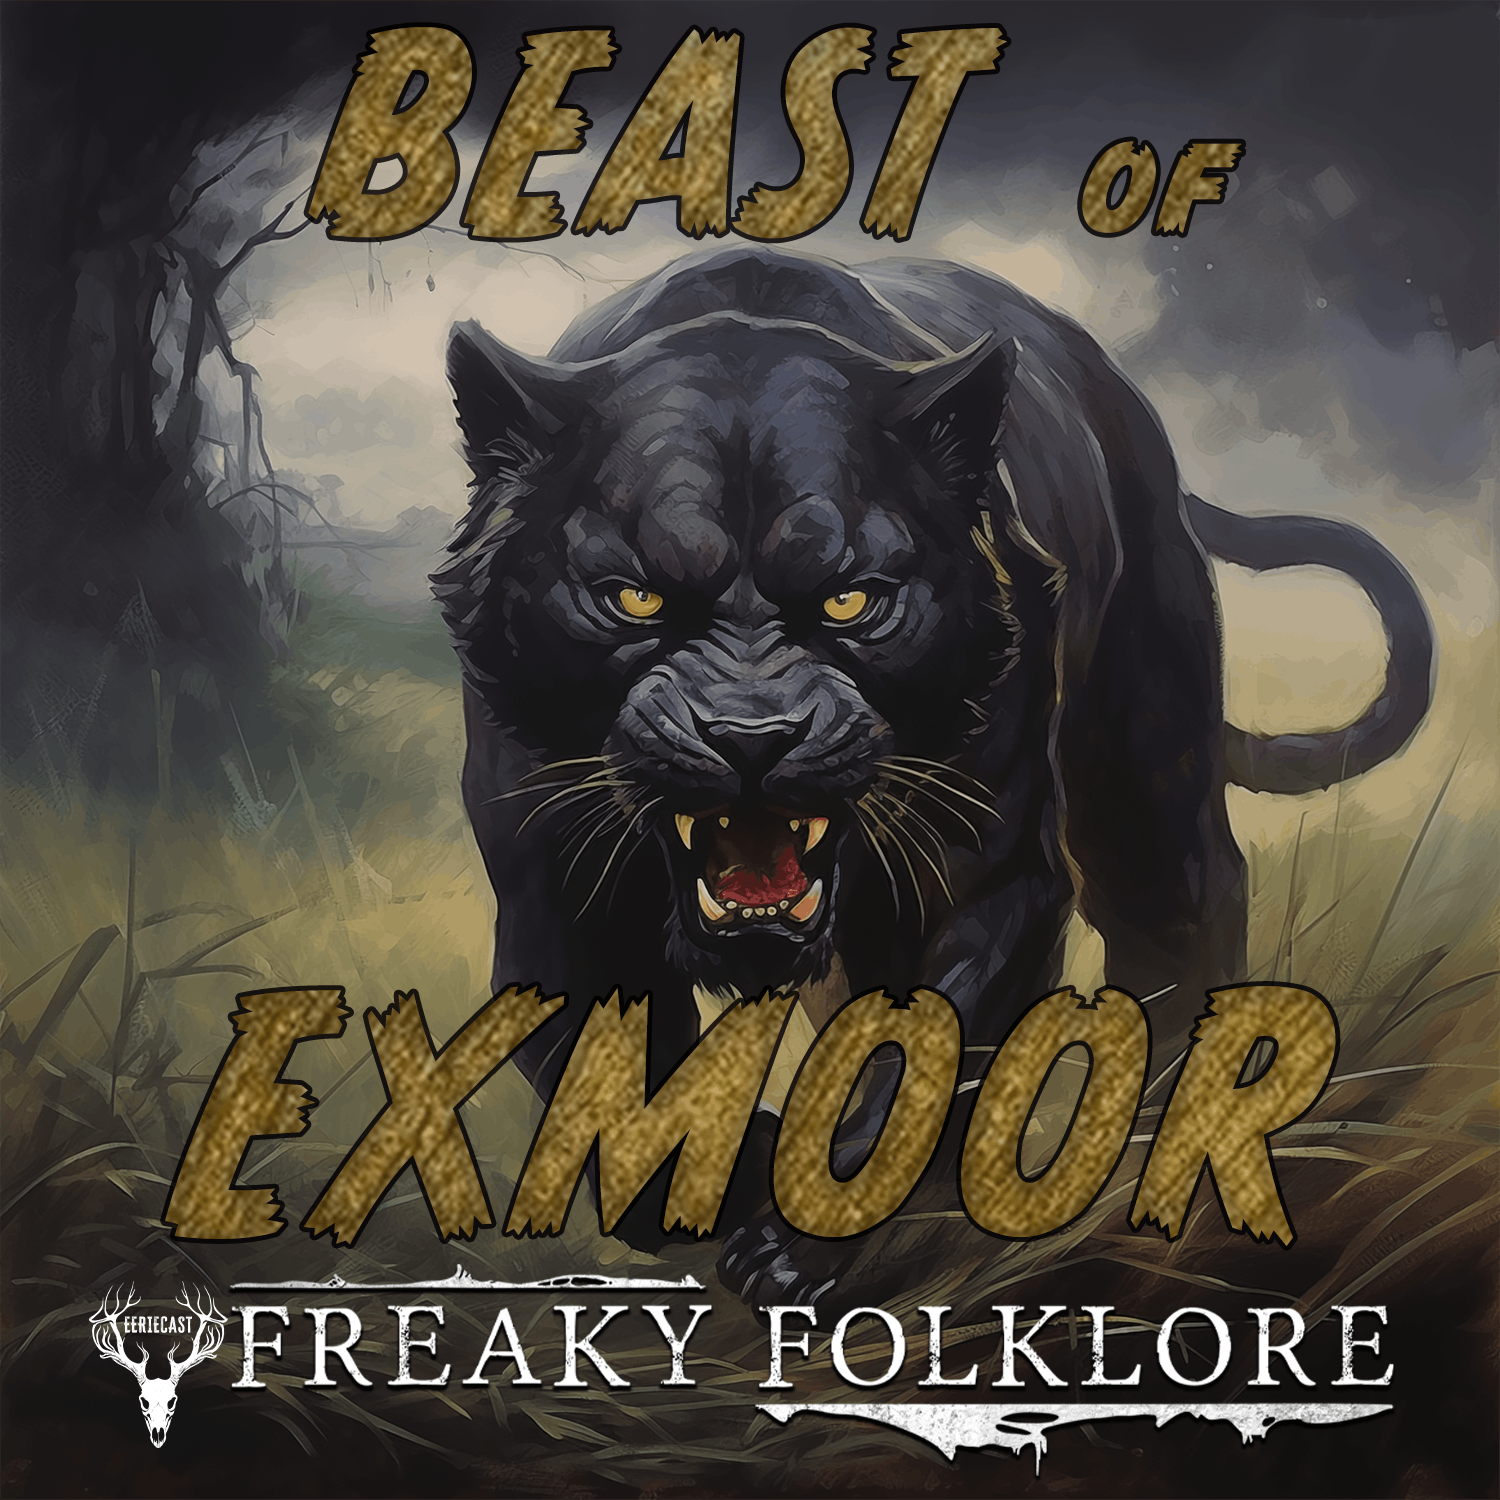 THE BEAST OF EXMOOR - Legendary Feline Predator